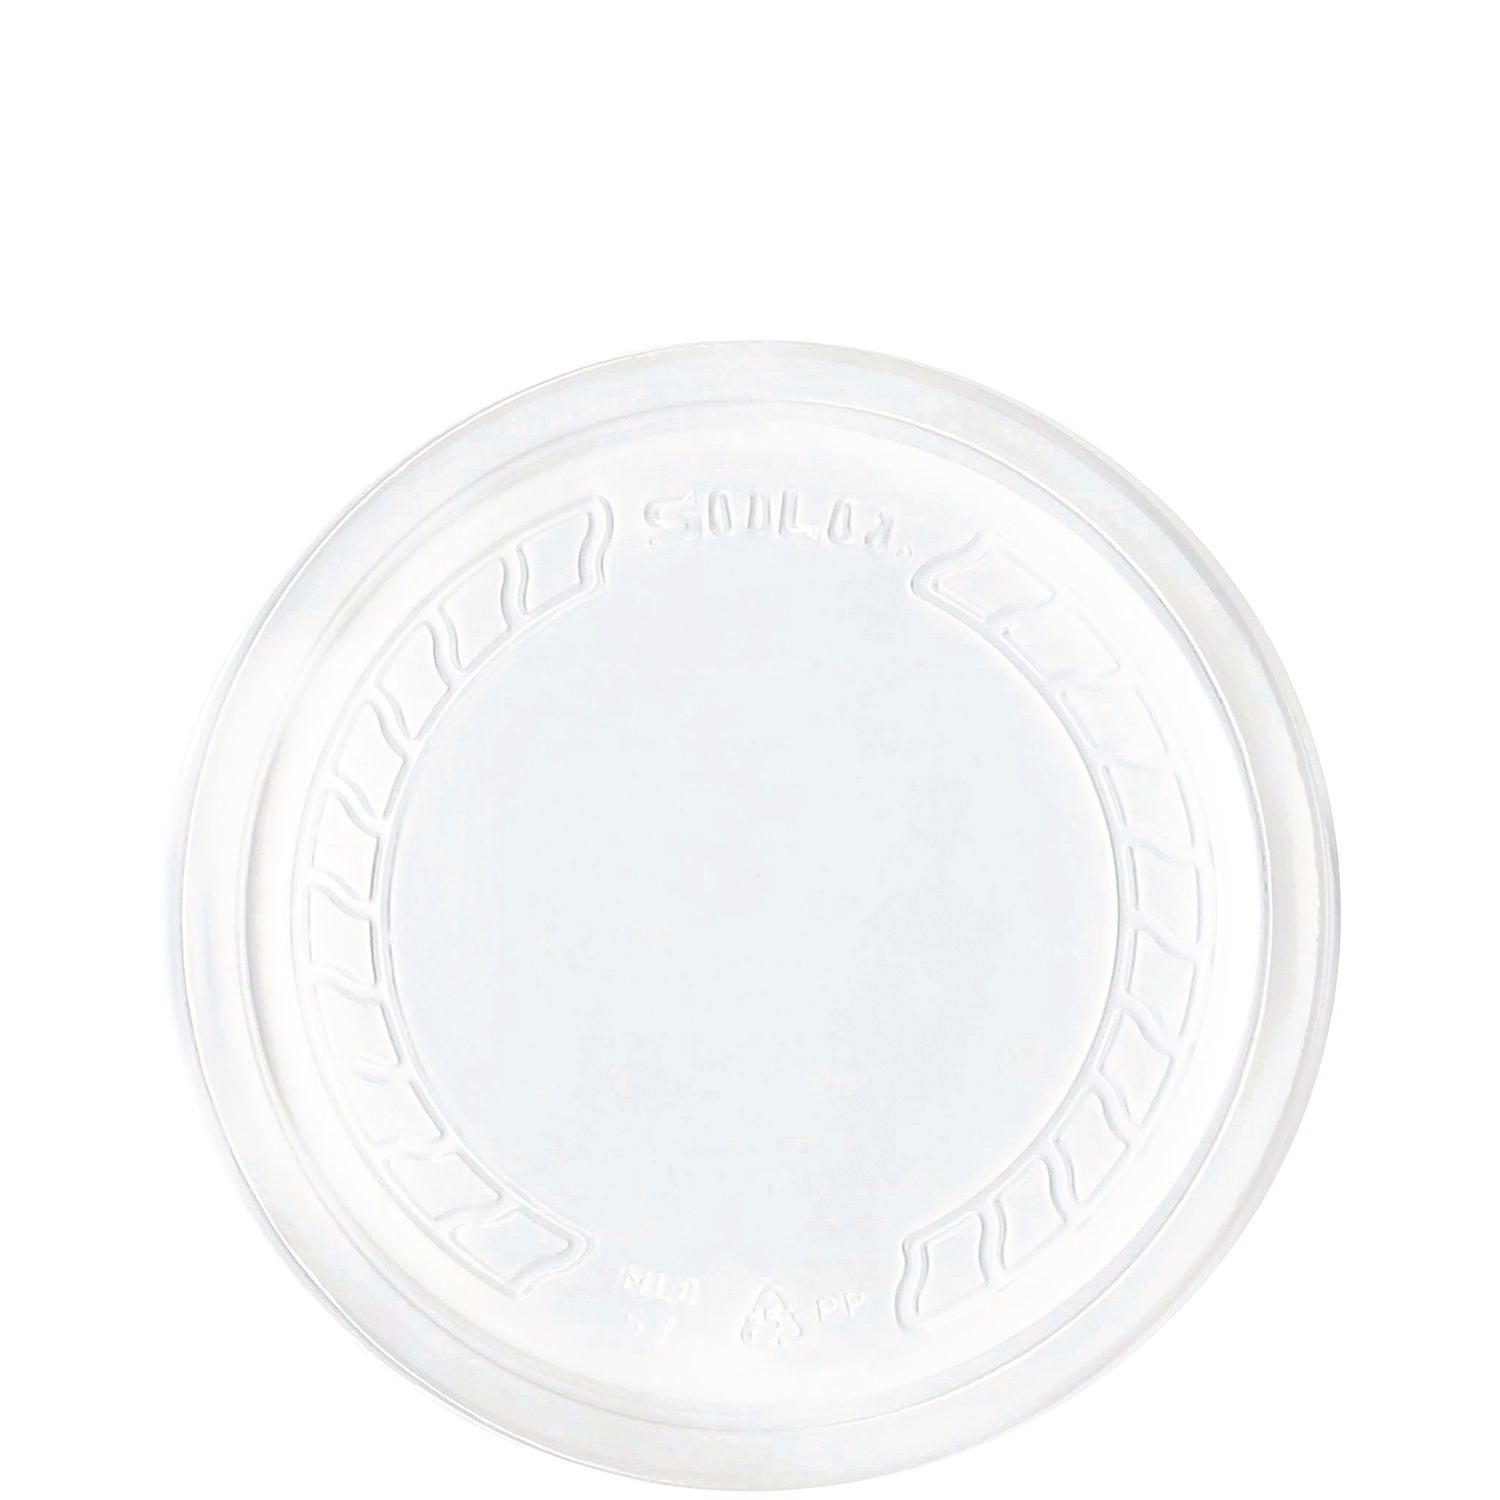 conex-deli-container-lid-clear-plastic-500-carton_dccnl8rt7000 - 1